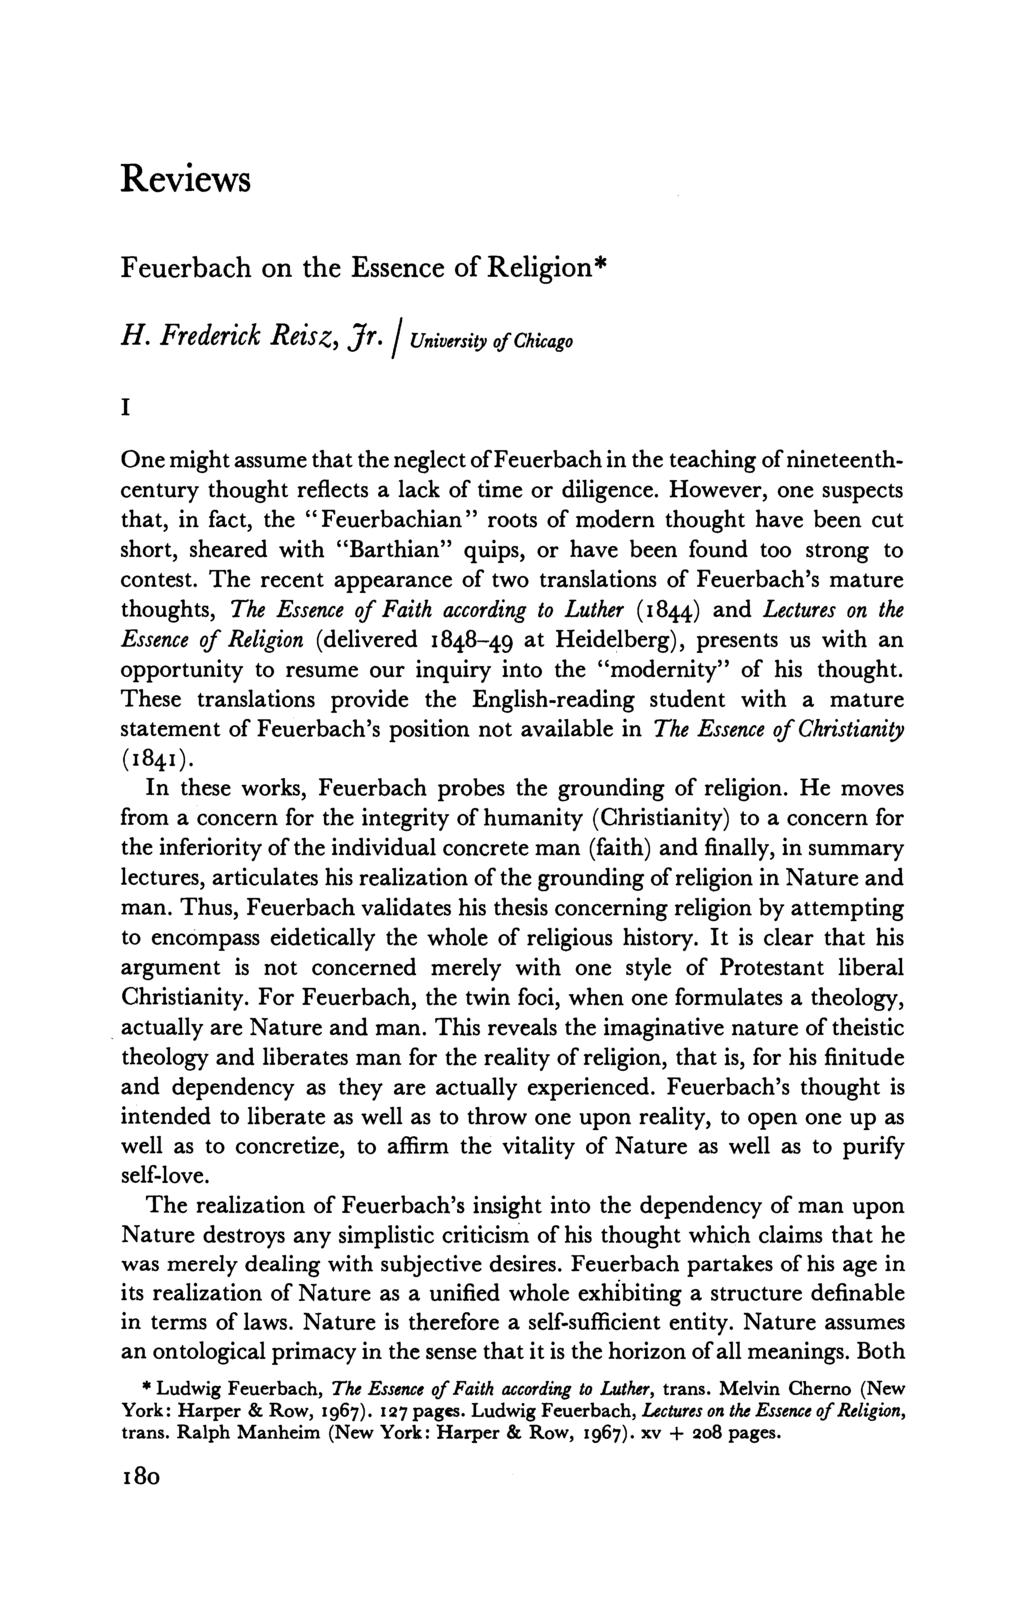 Reviews Feuerbach on the Essence of Religion* H. Frederick Reisz, Jr.